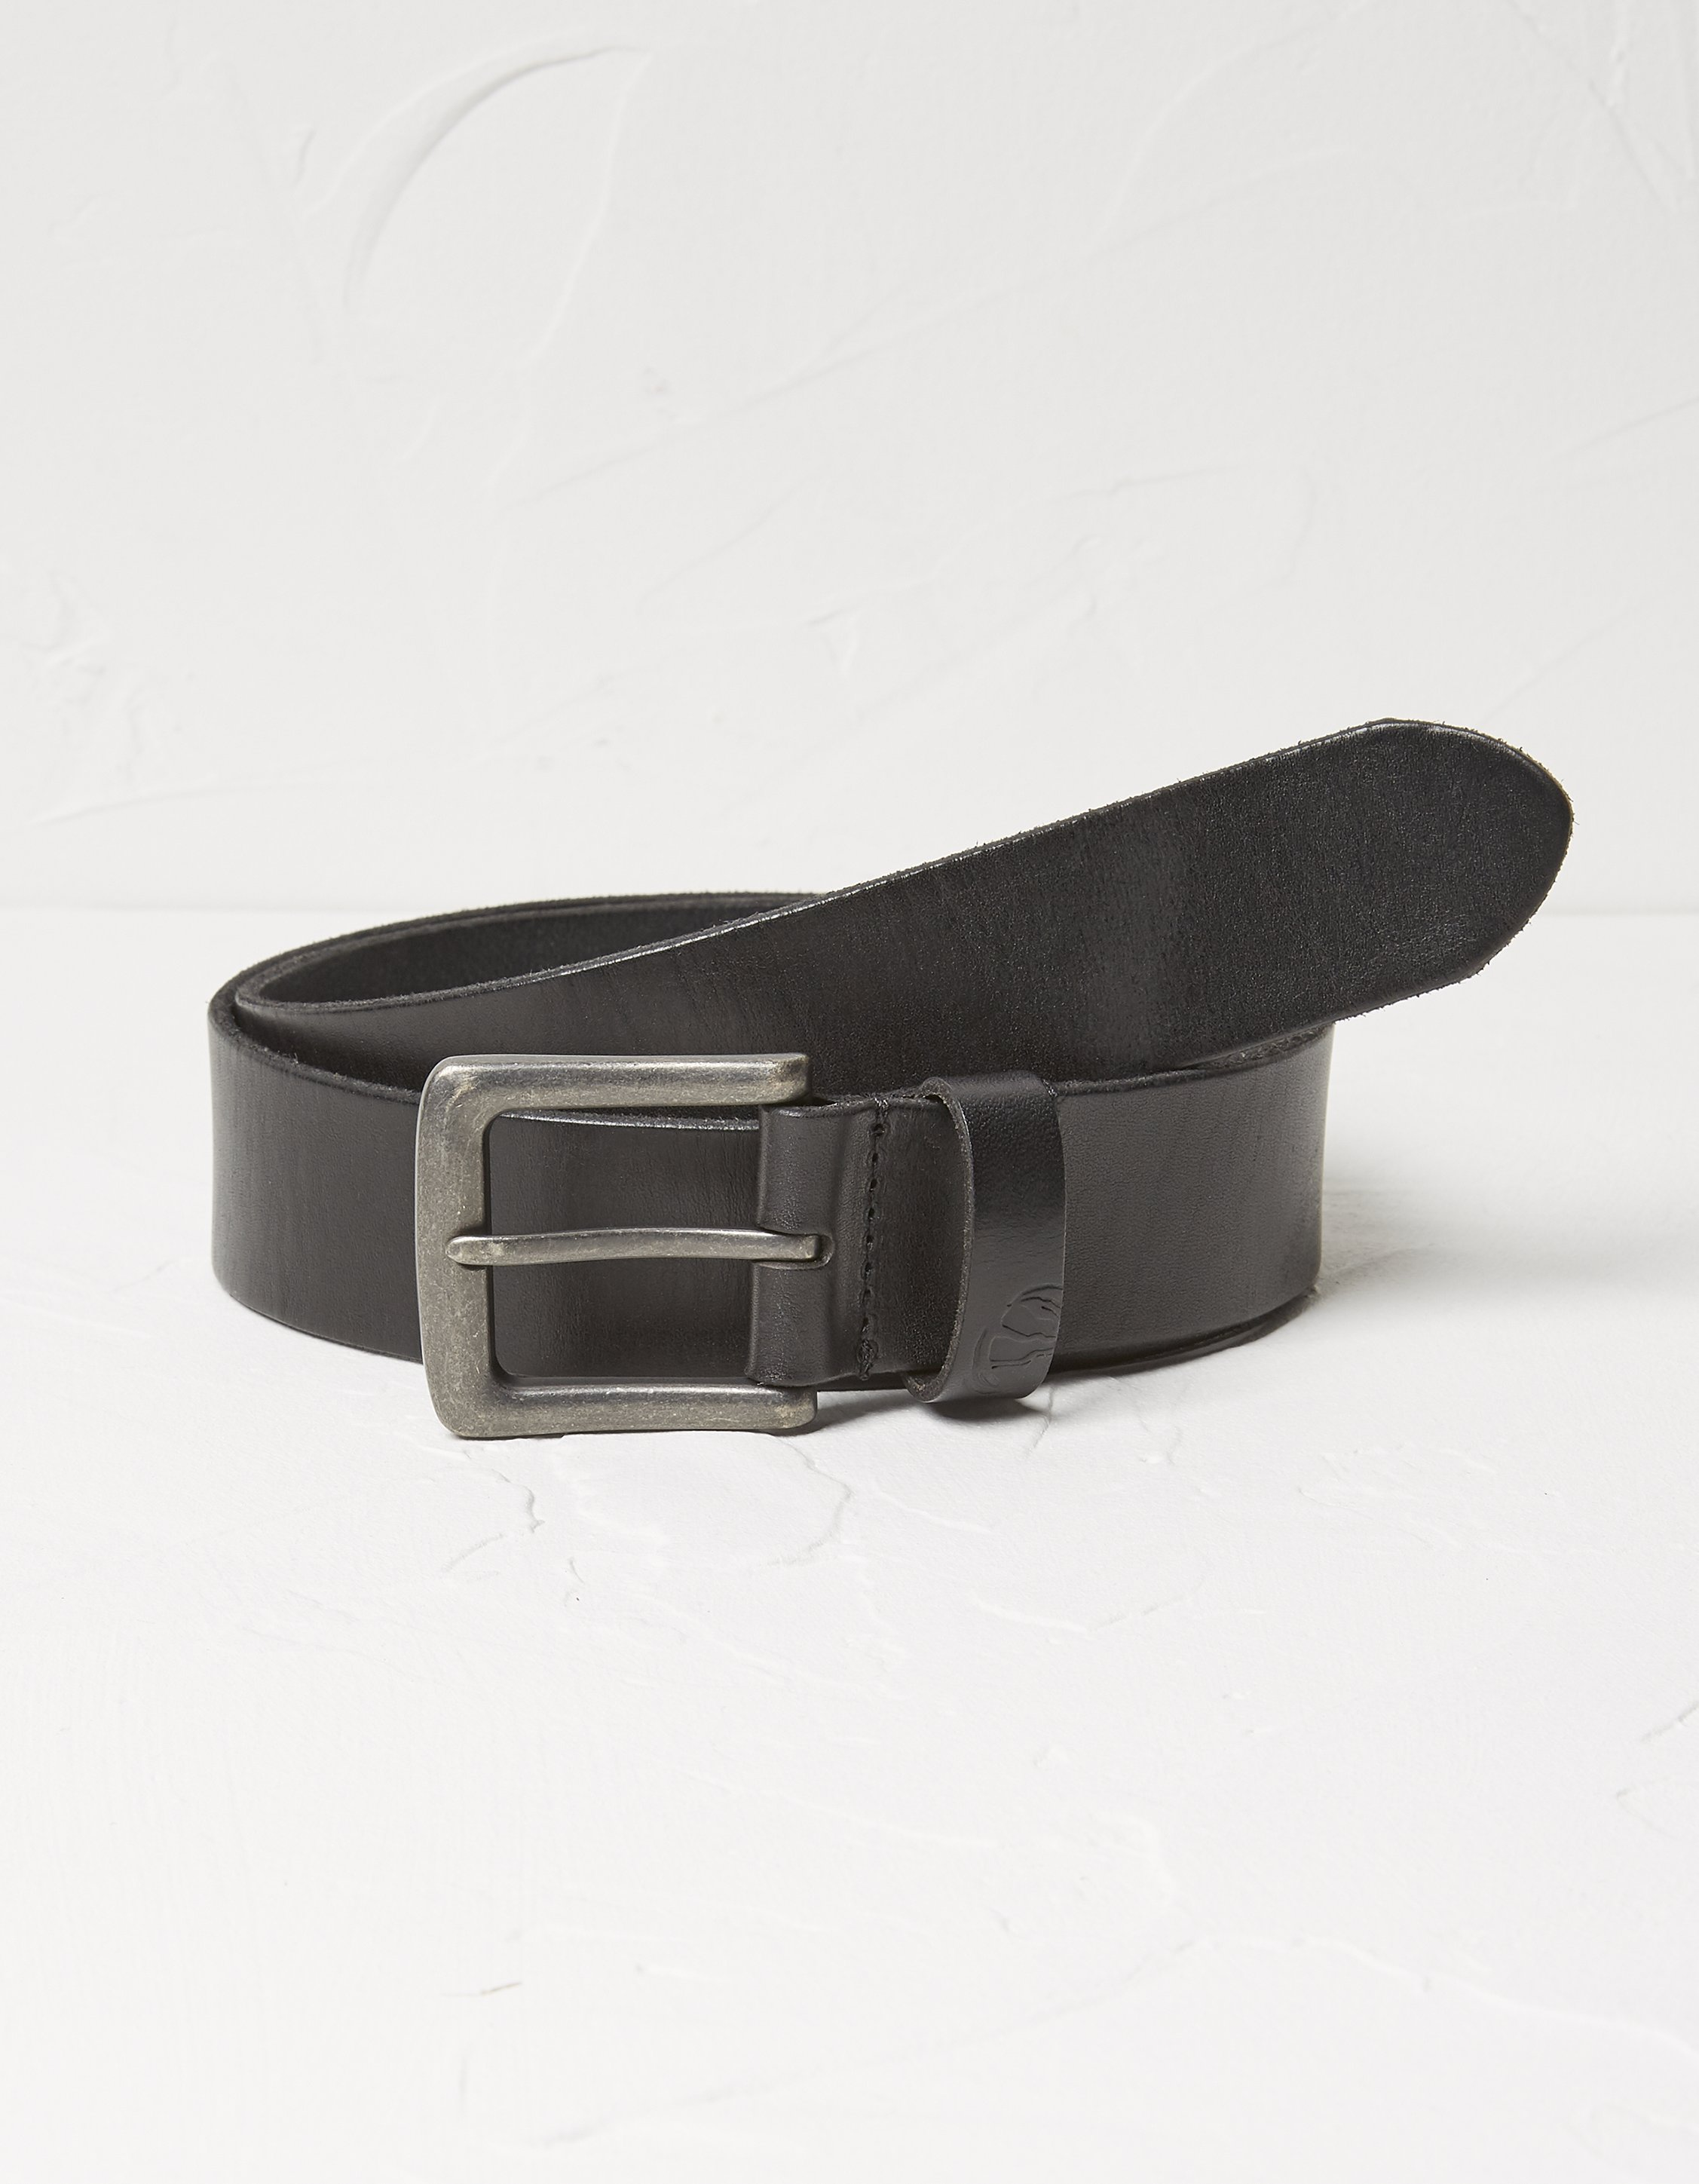 Mens Italian Leather Belt